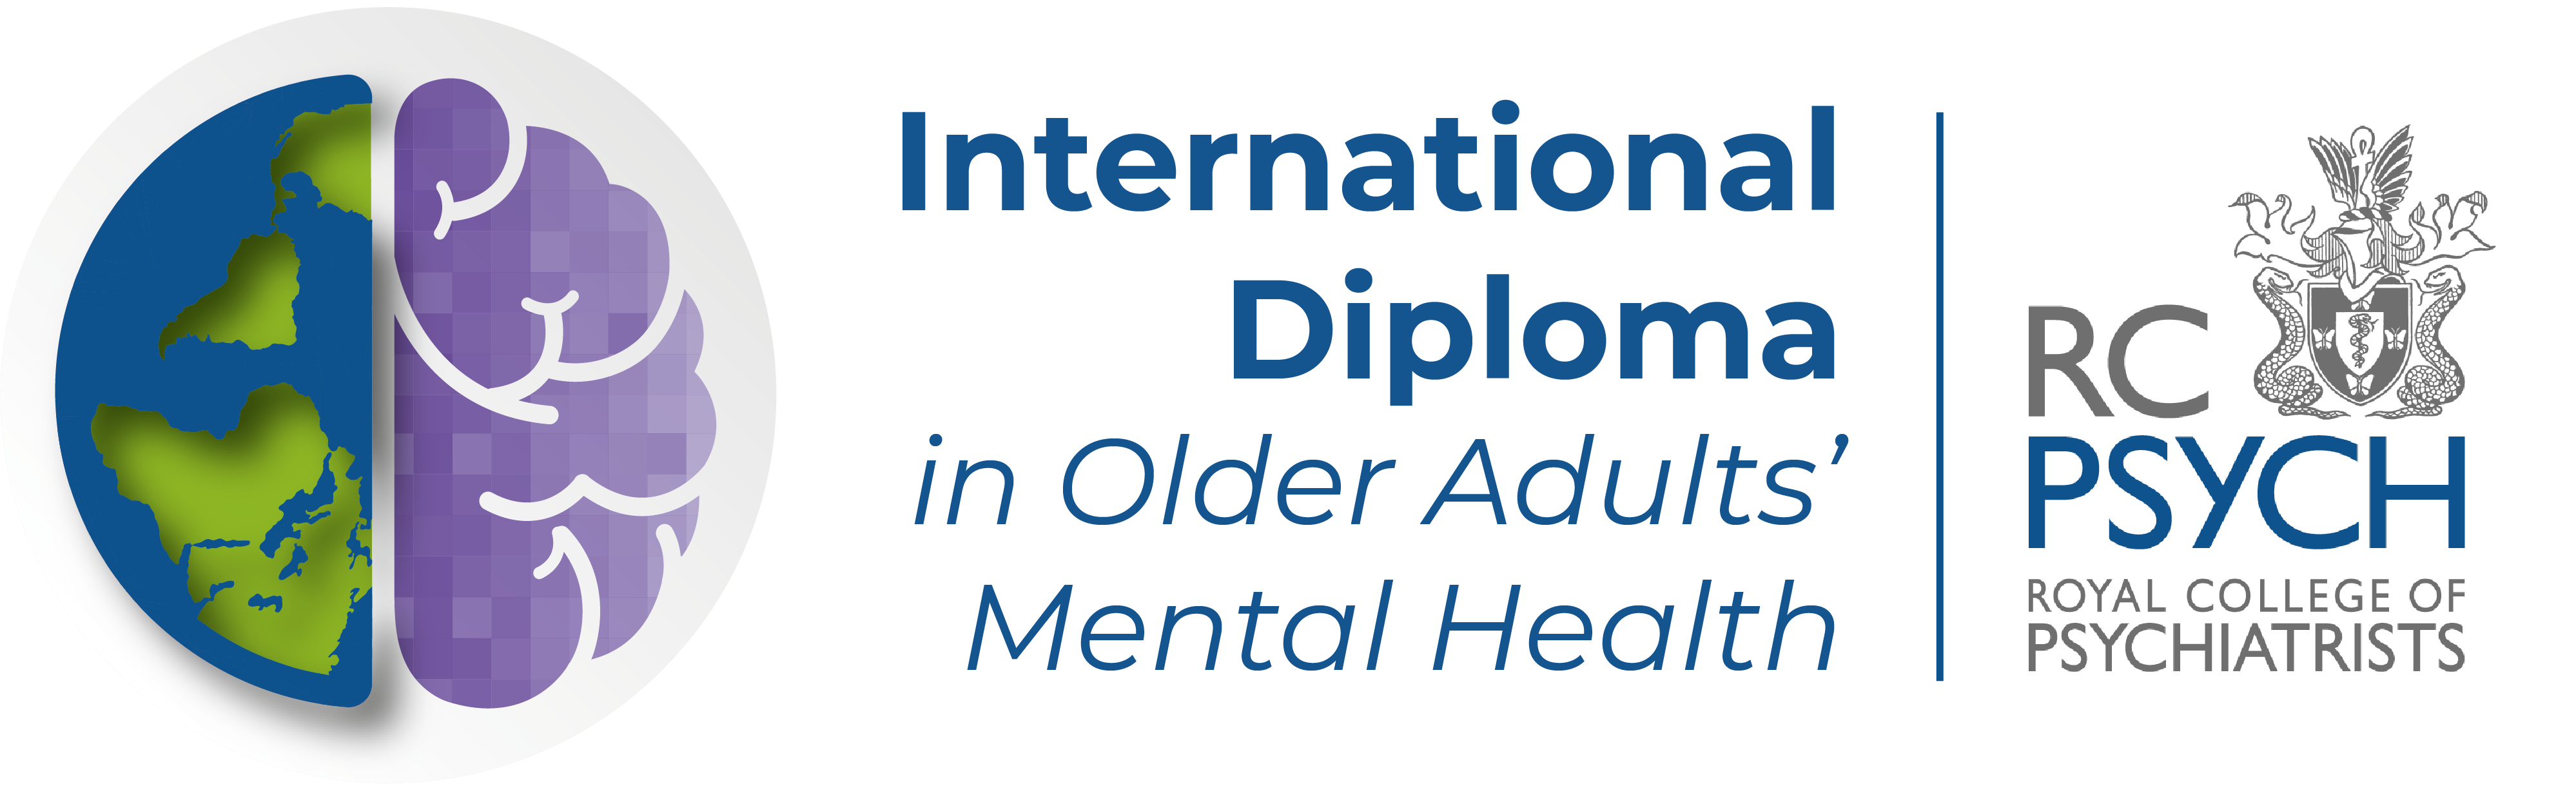 International Diploma in Older Adults' Mental Health